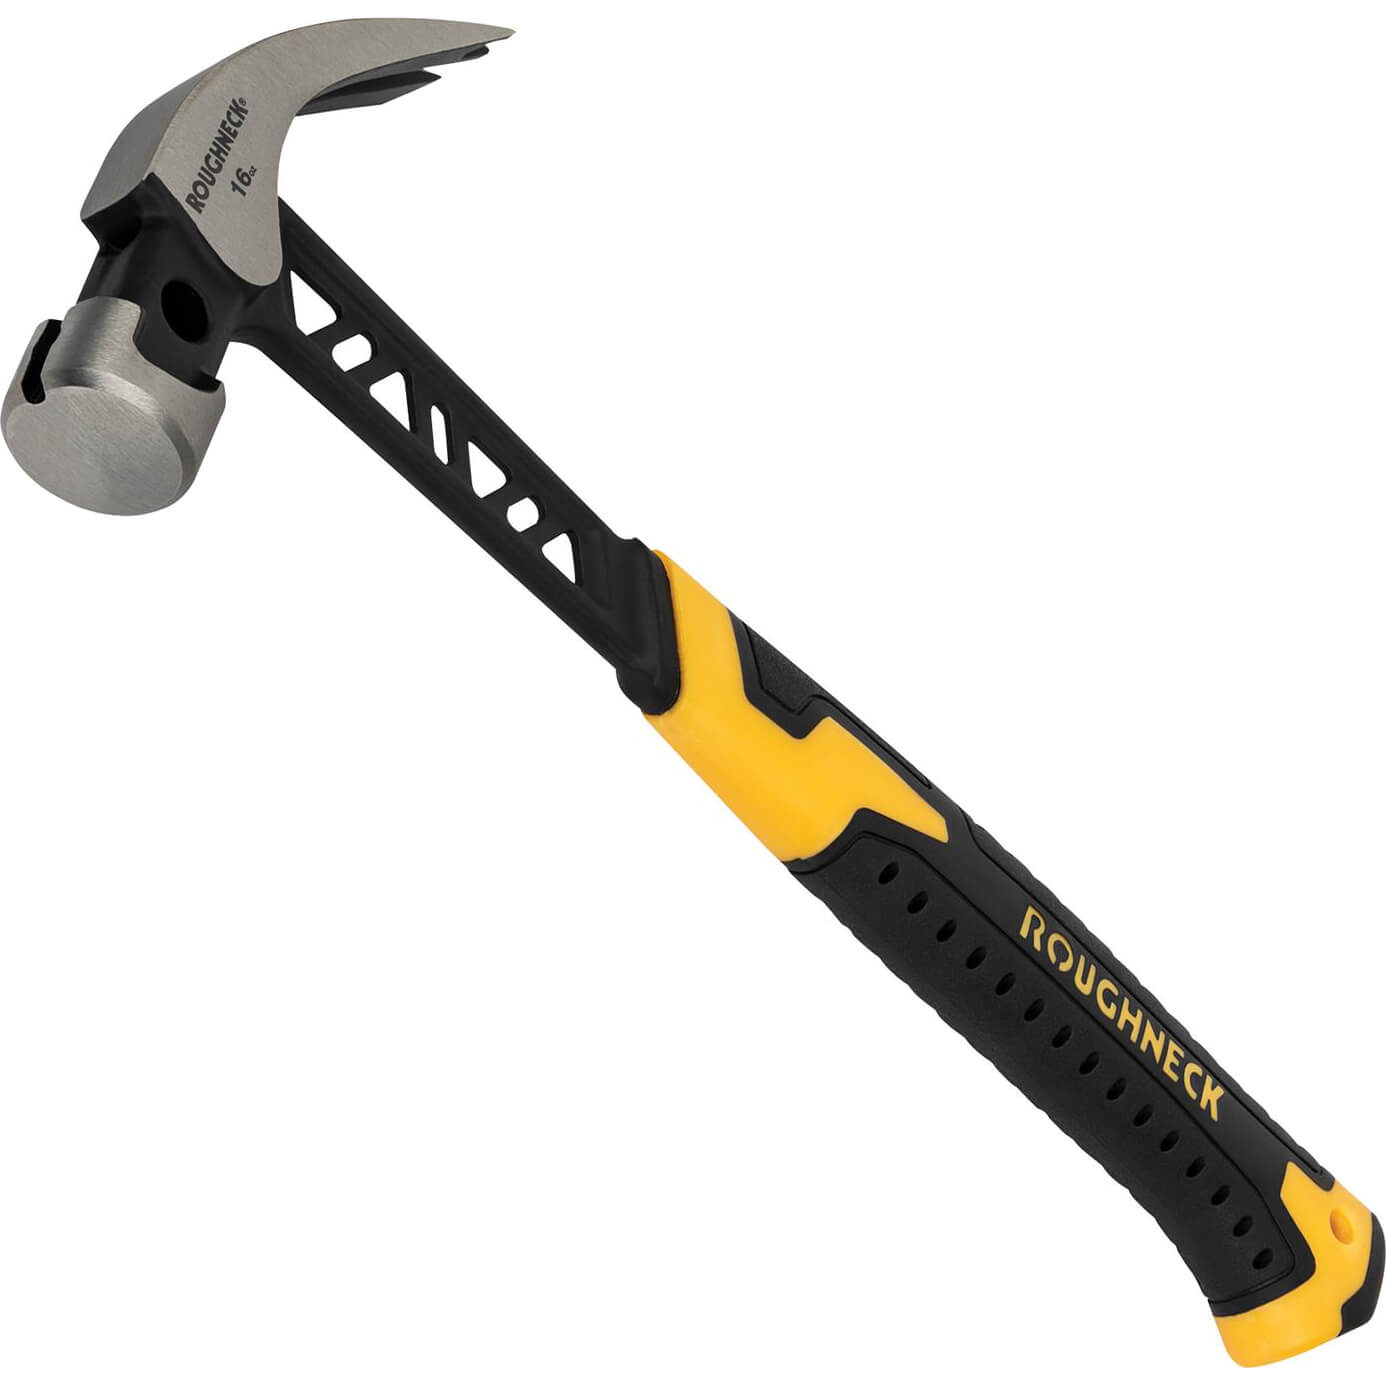 Image of Roughneck Gorilla V-Series Claw Hammer 450g